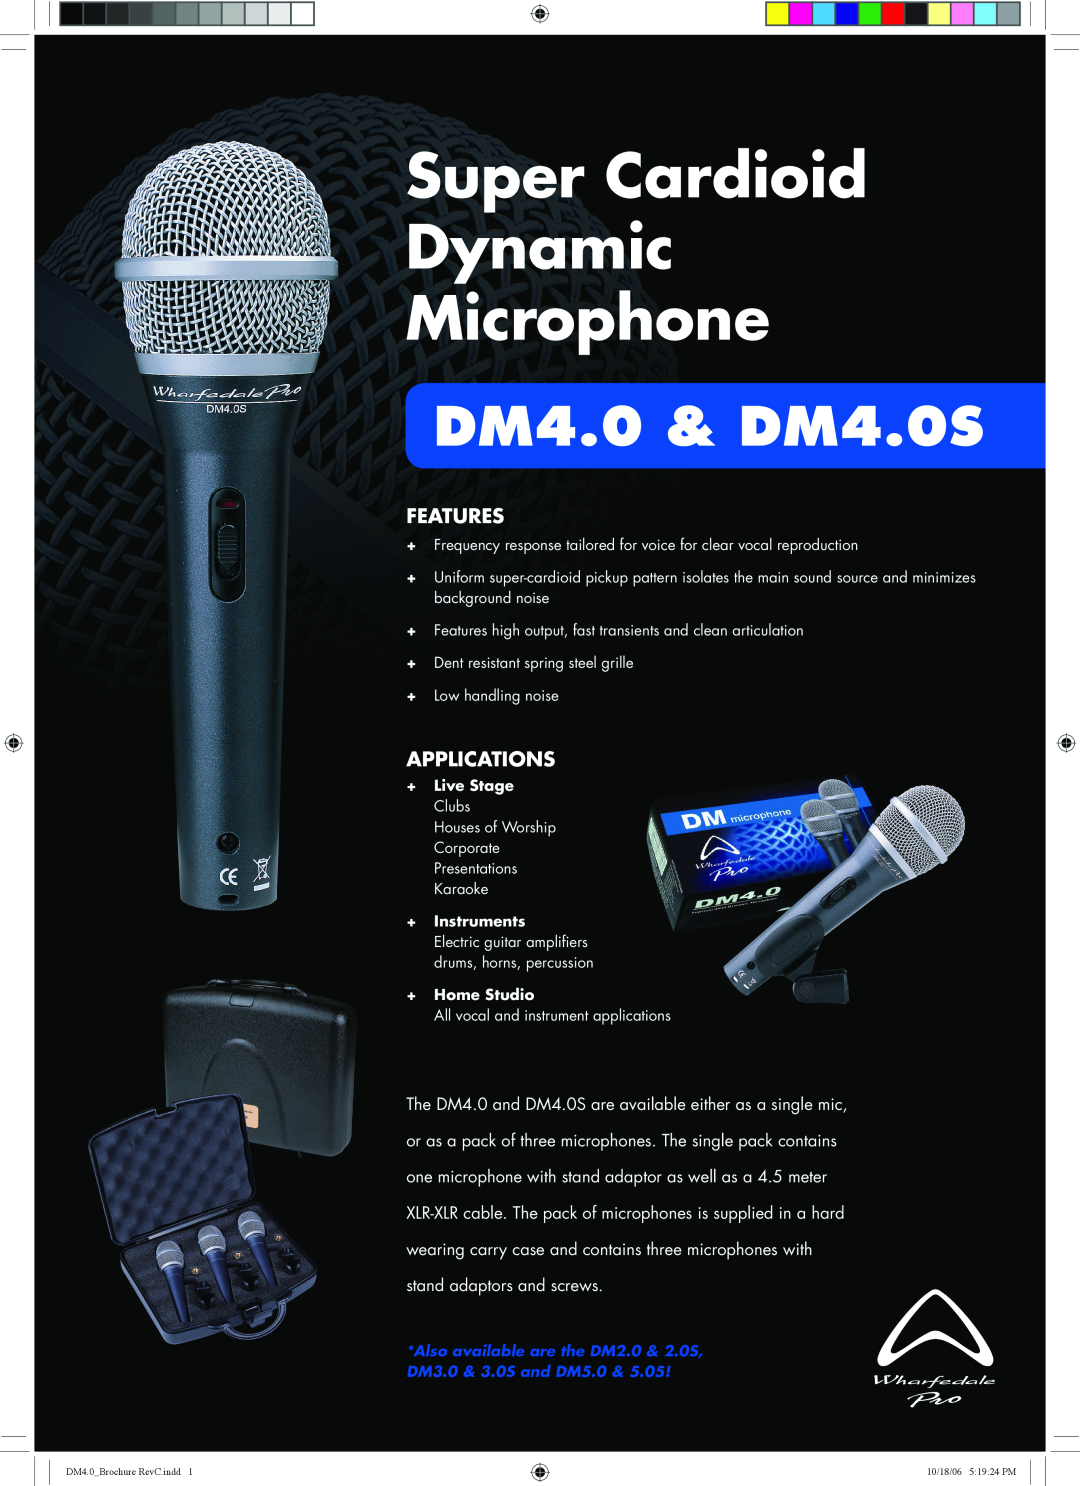 Wharfedale brochure Super Cardioid Dynamic Microphone, DM4.0 & DM4.0S, Features, Applications 